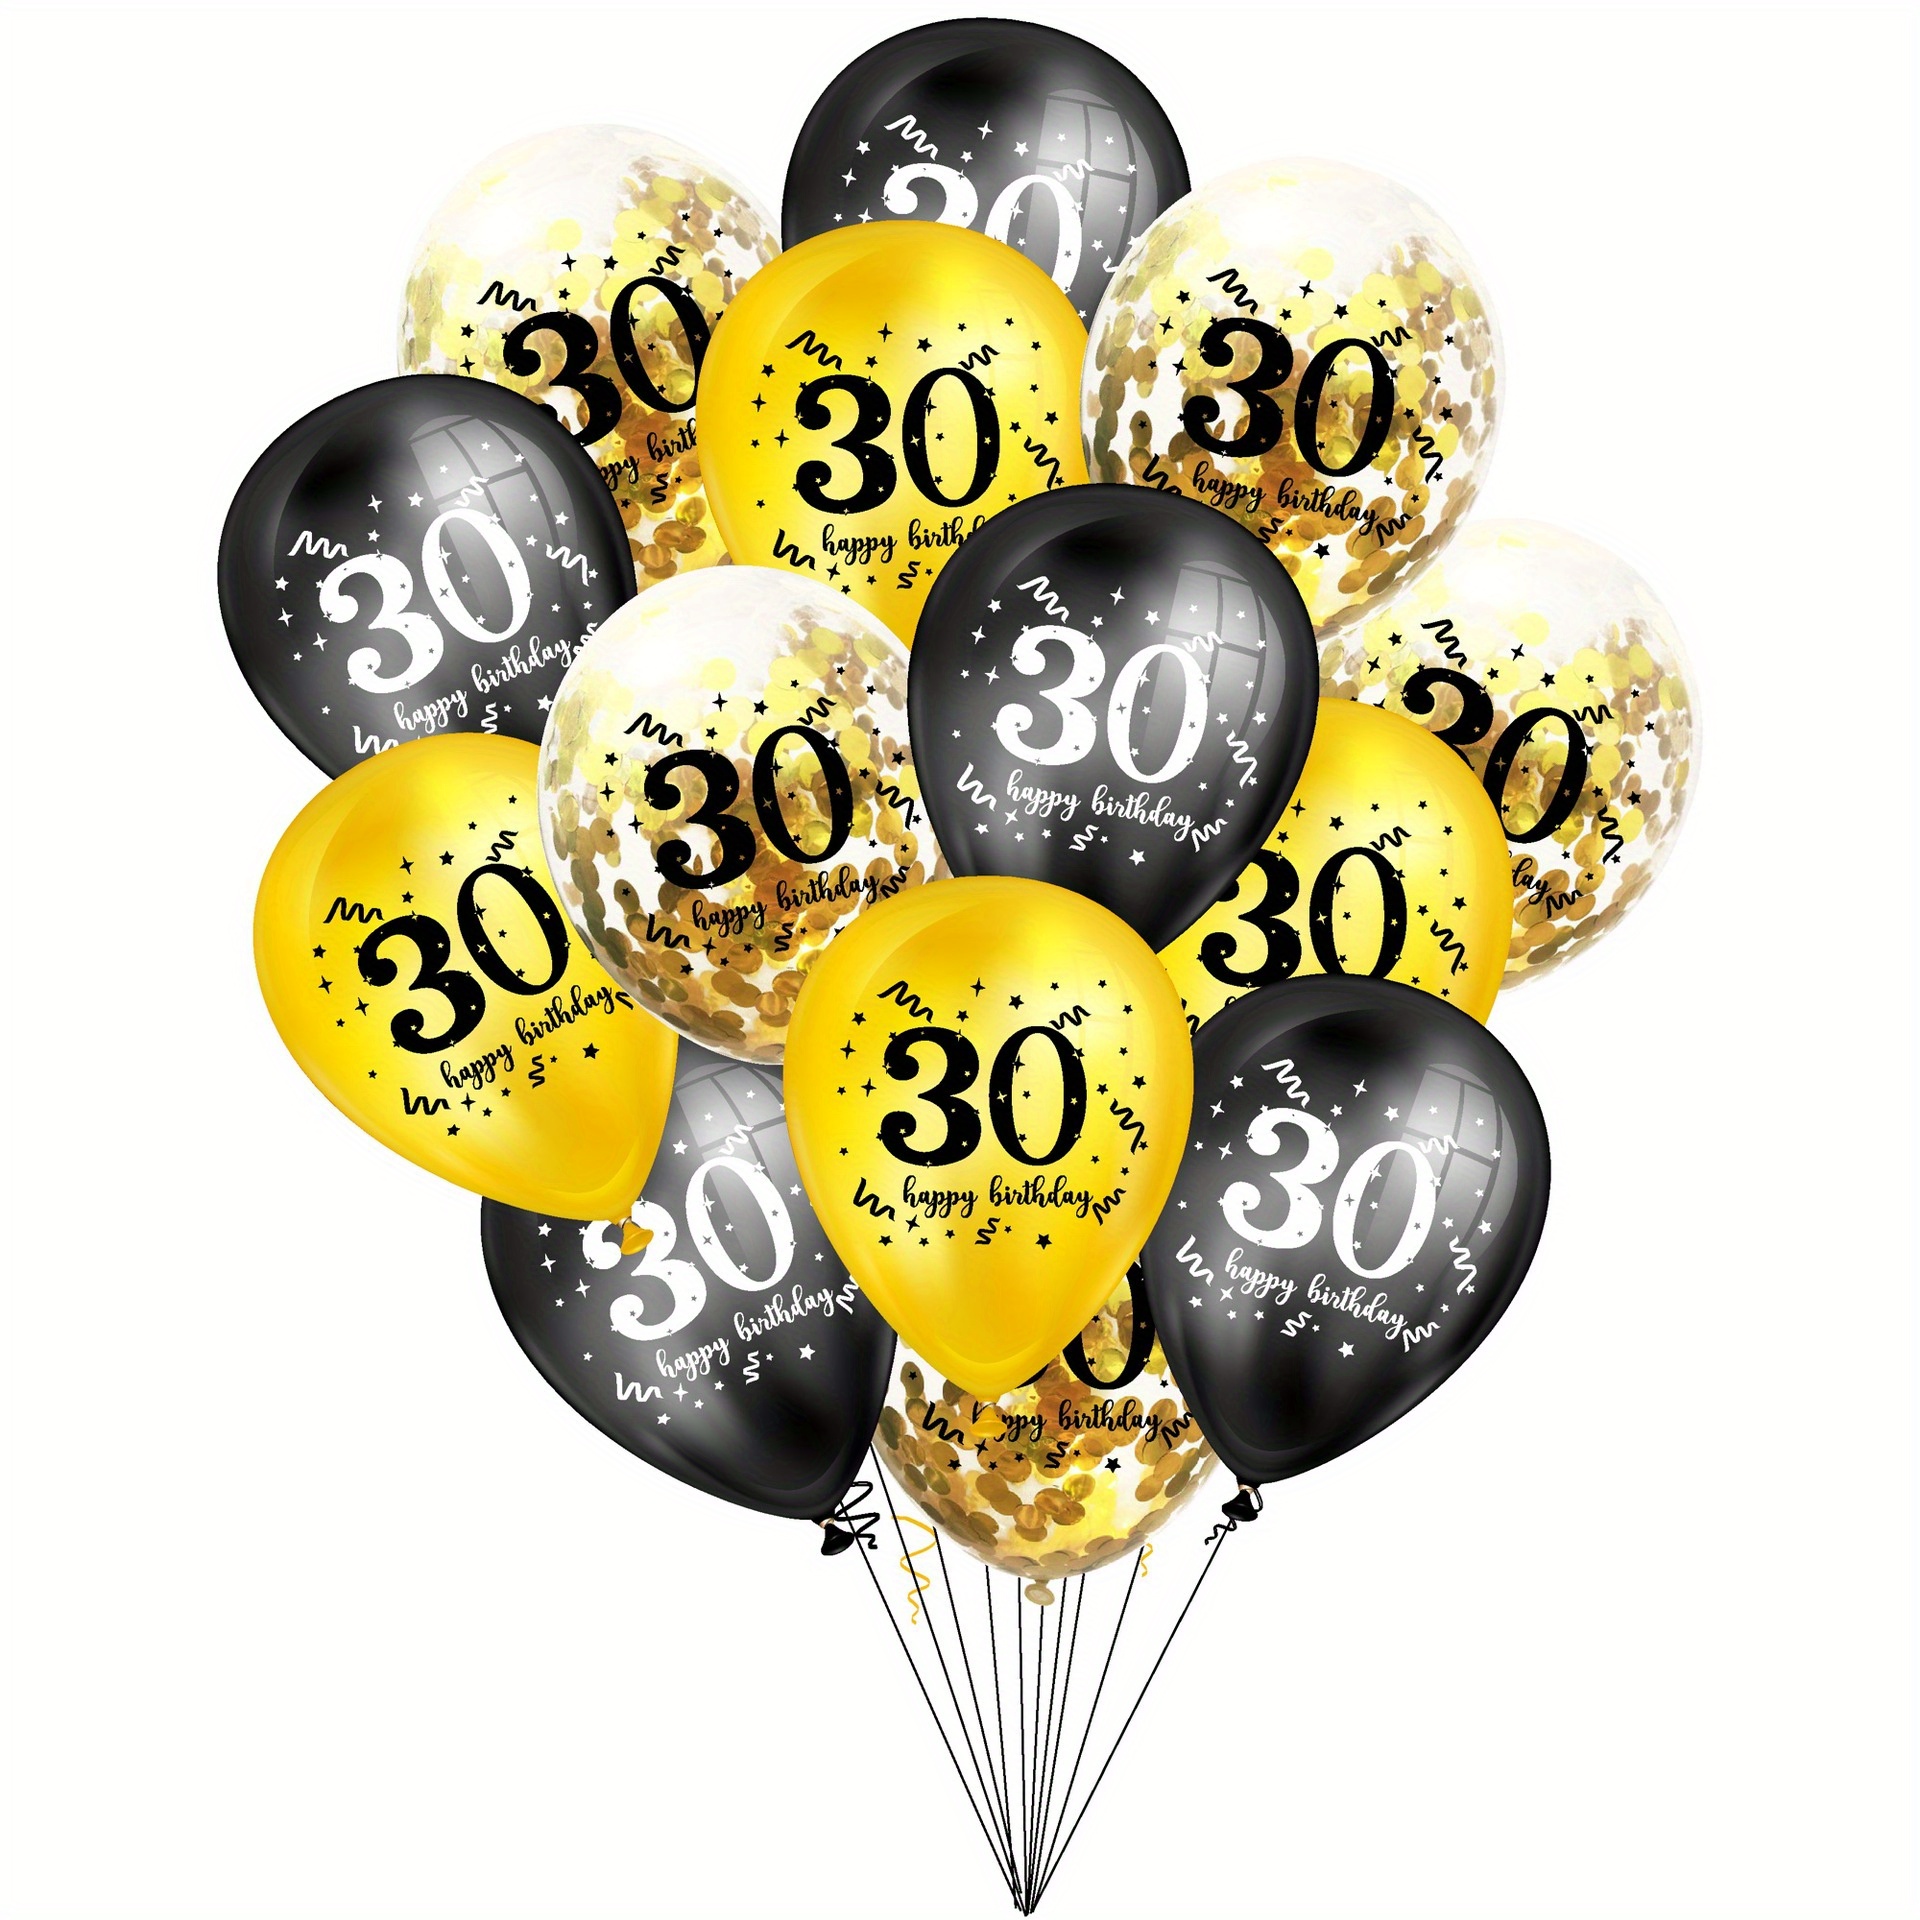  90th Birthday Balloons for Men, 15 Pcs Black Gold Happy 90th  Birthday Balloons, Black Gold 90th Birthday Party Decorations Balloons for  Men Women 90th Birthday Decor : Home & Kitchen